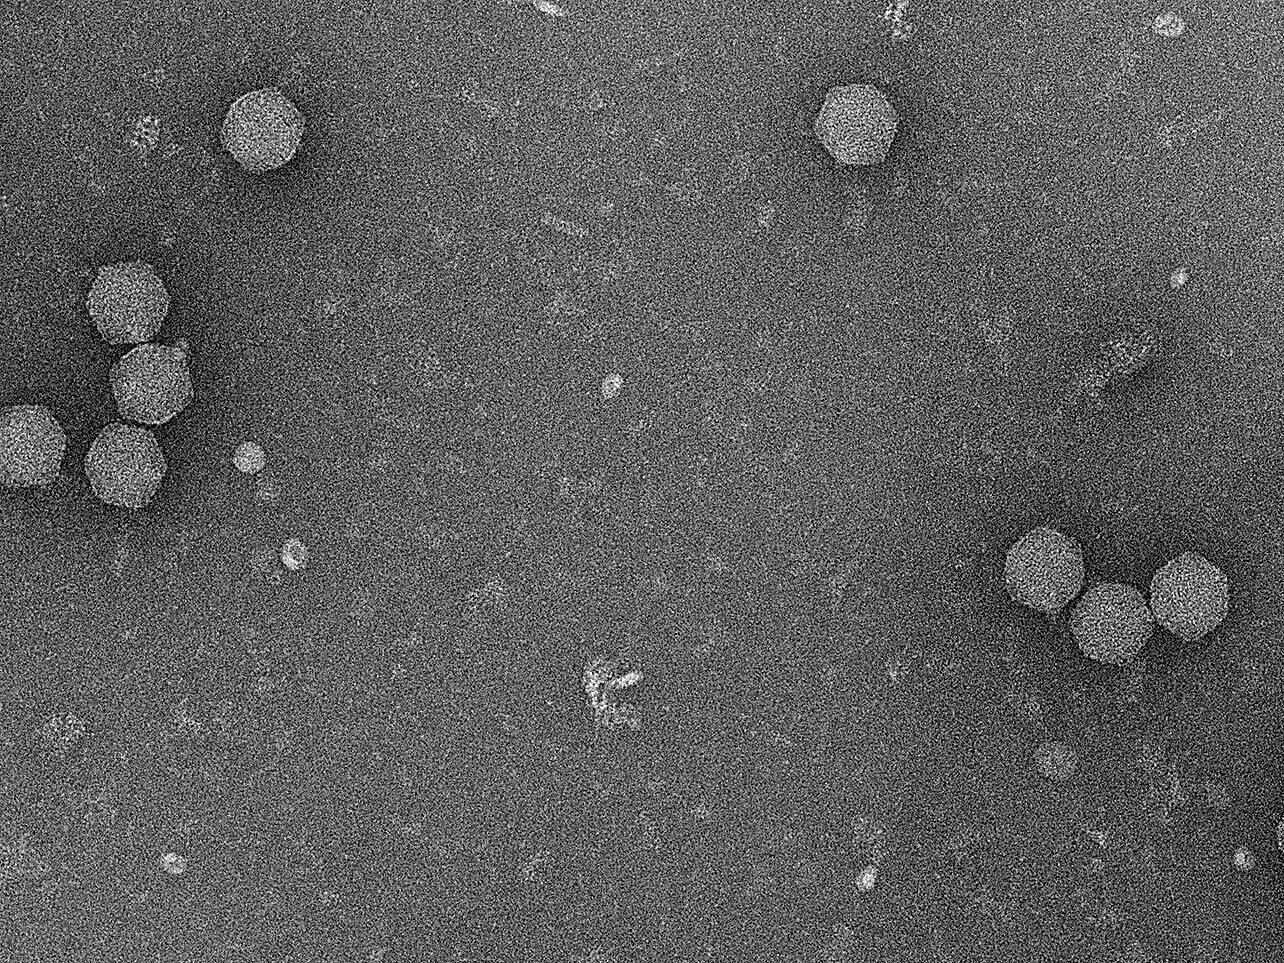 Electron micrograph of phage heads